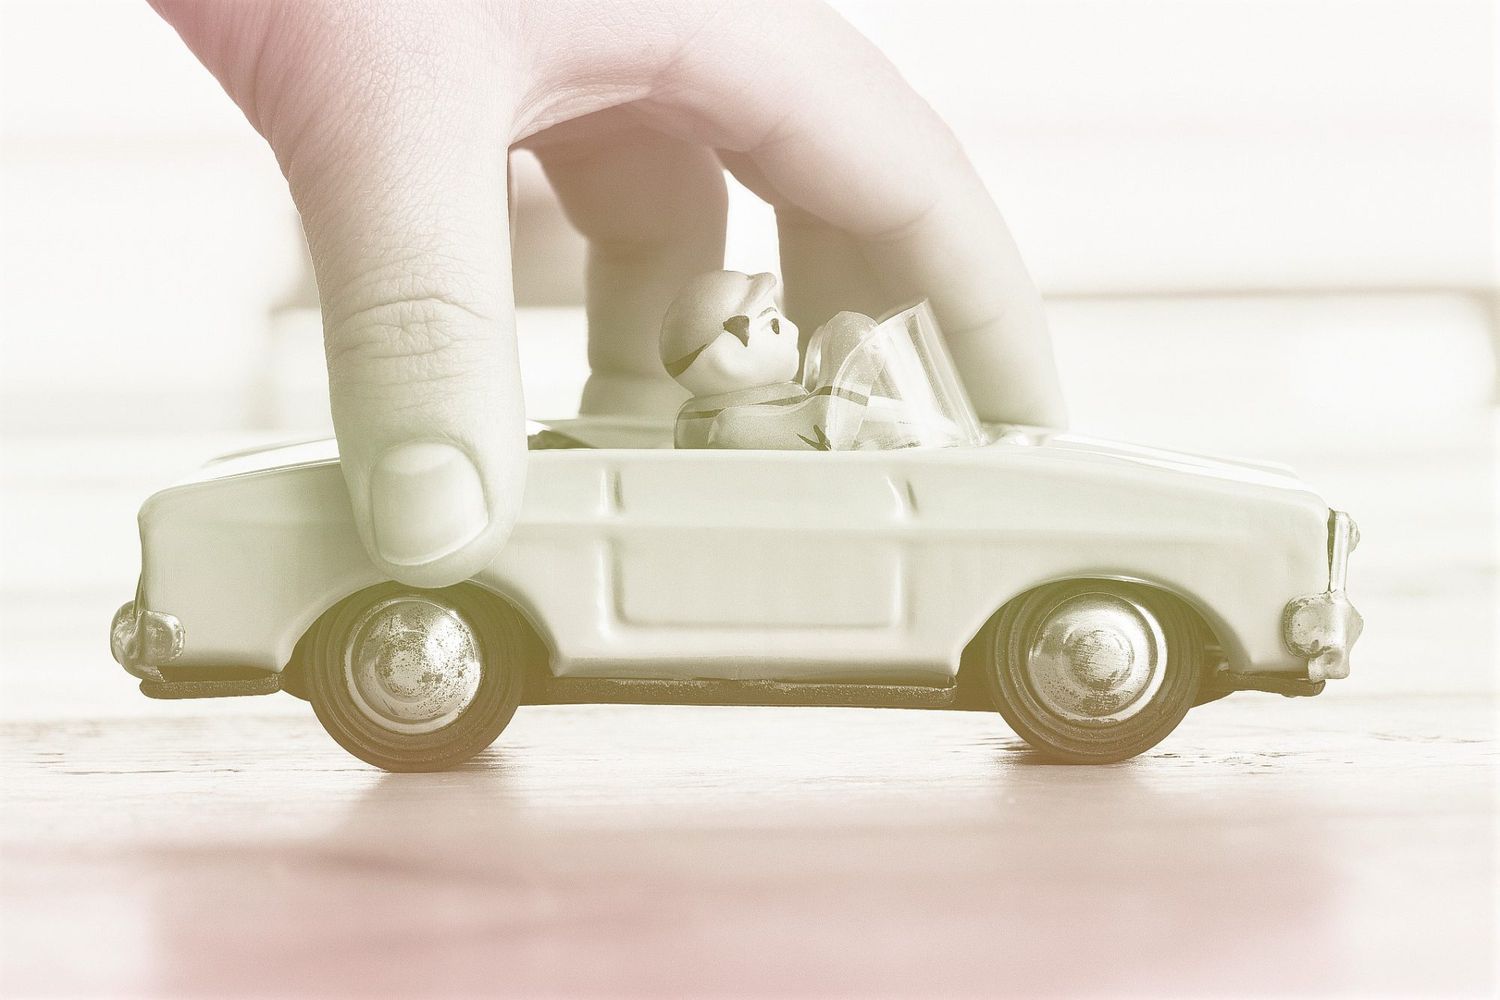 Hand pushing vintage toy convertible car